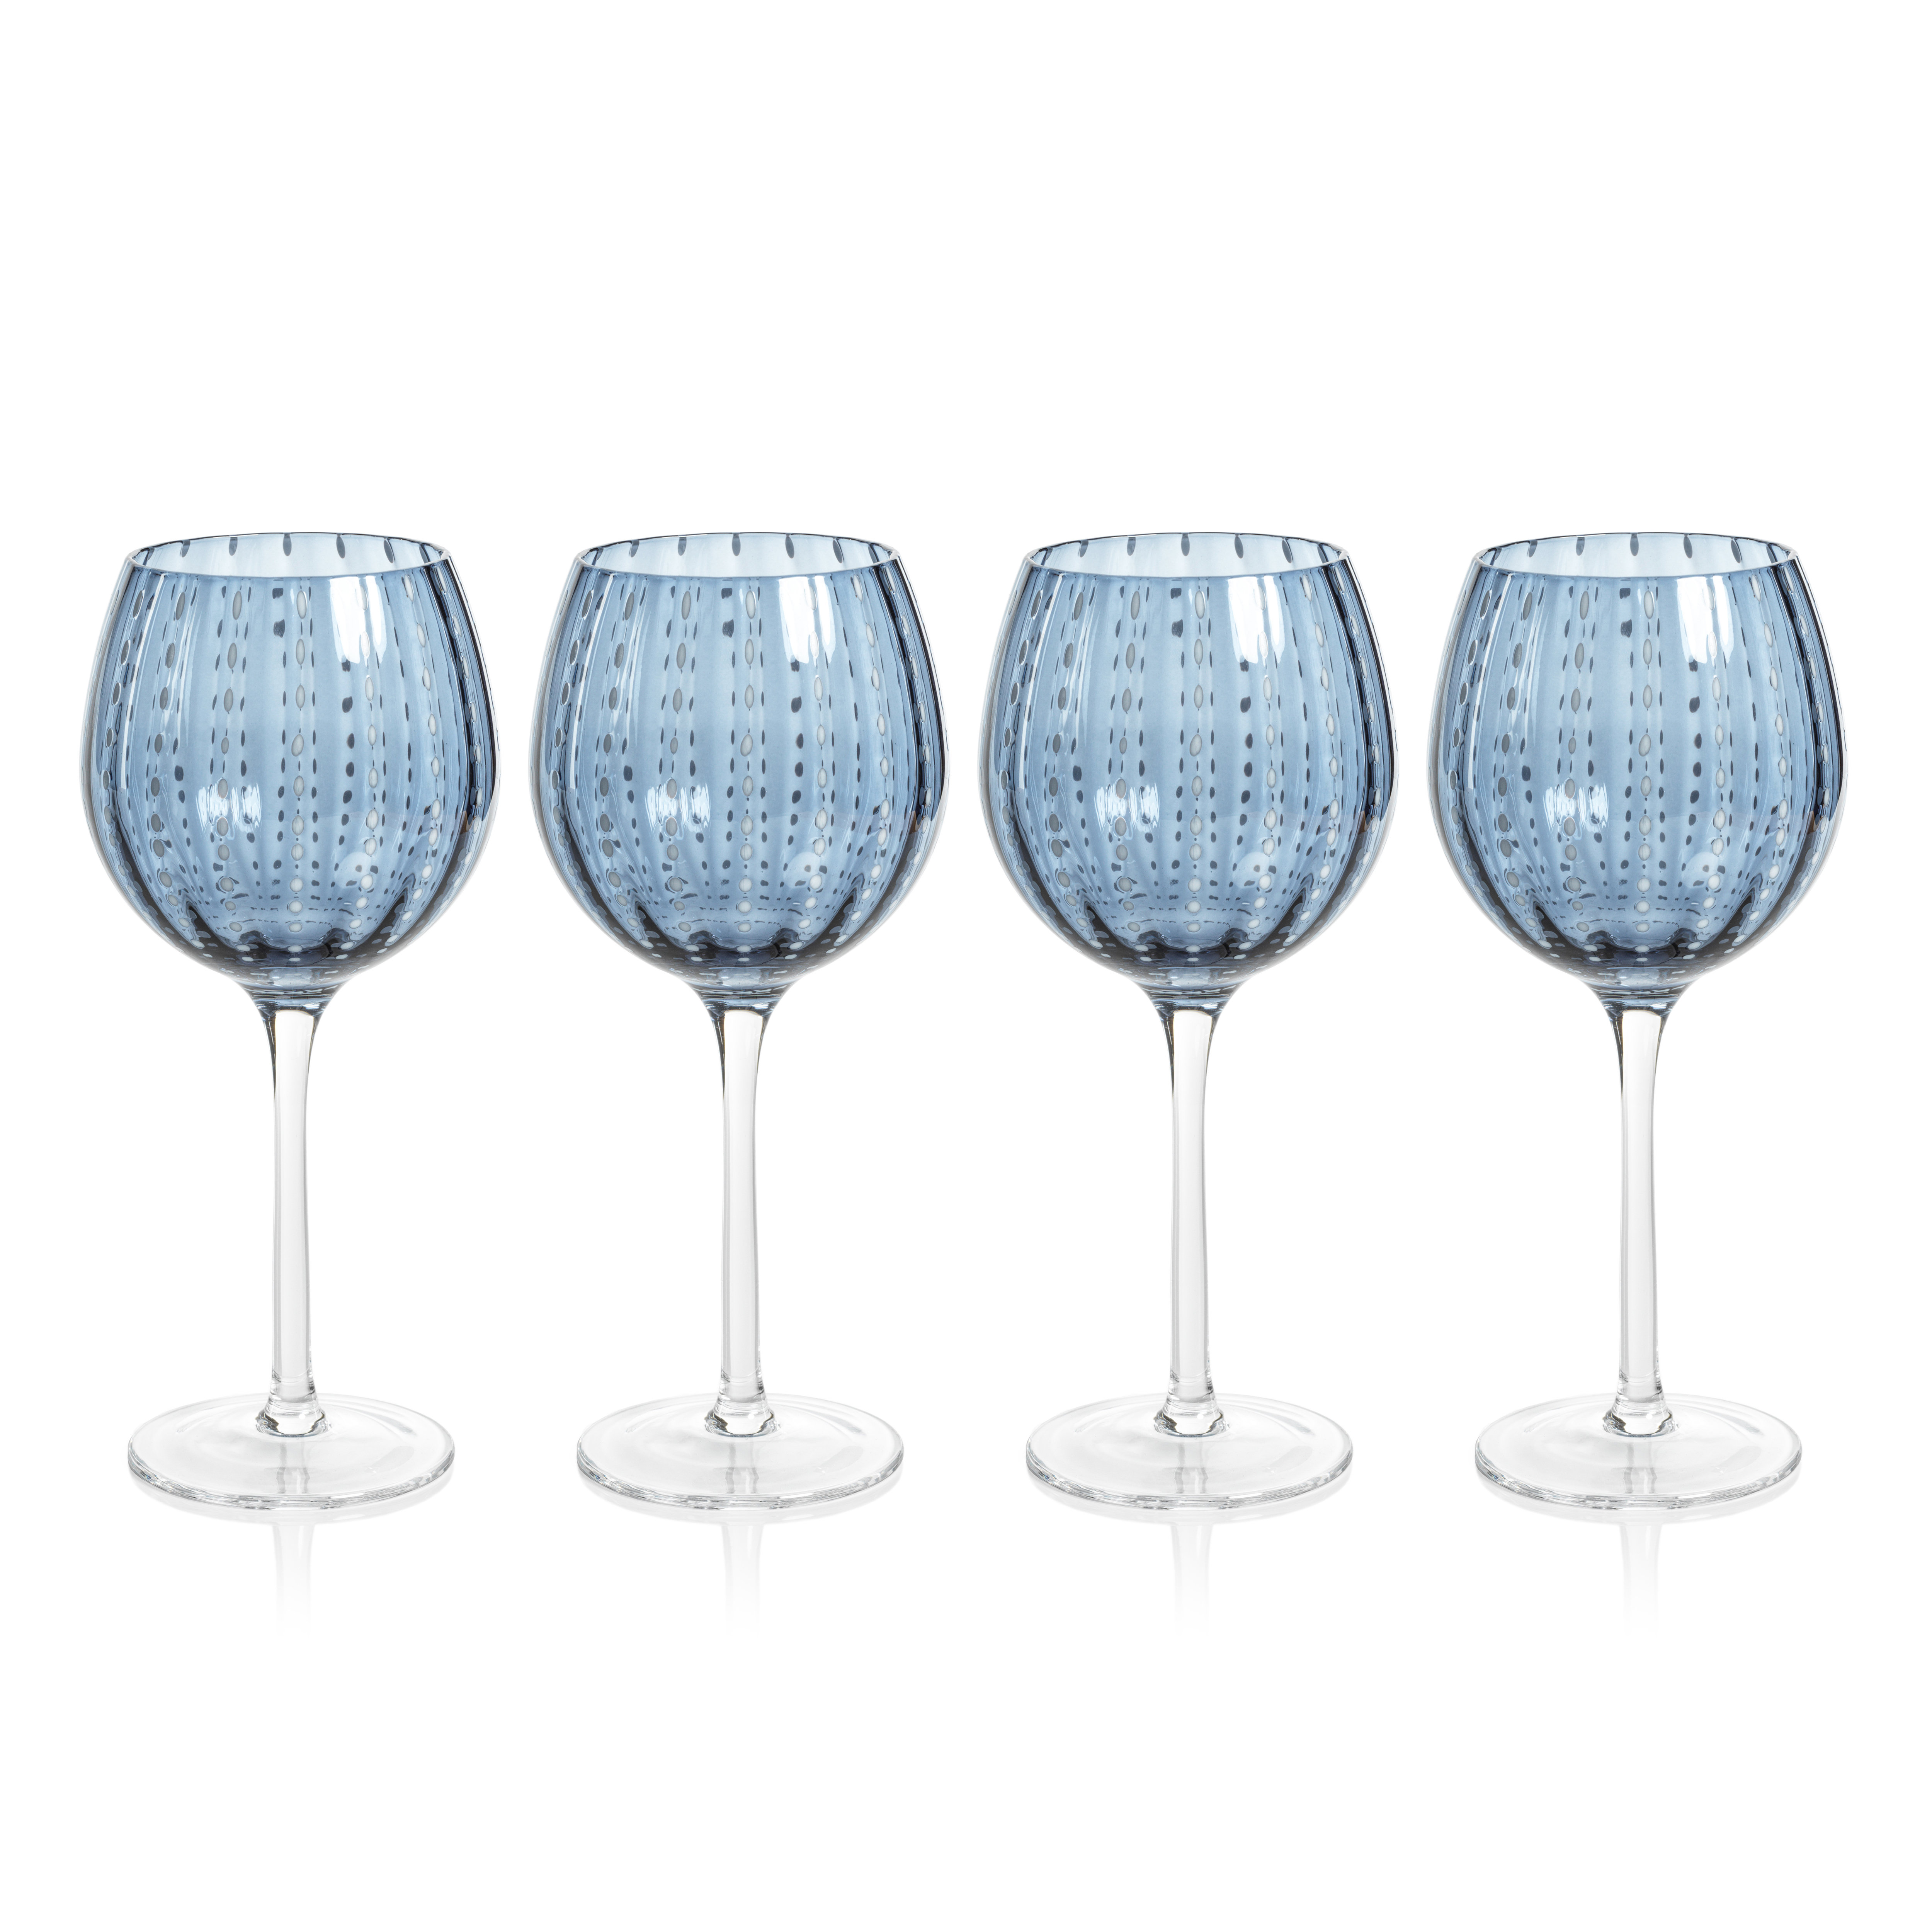 Set of Two Wine Glasses — BC Essentials